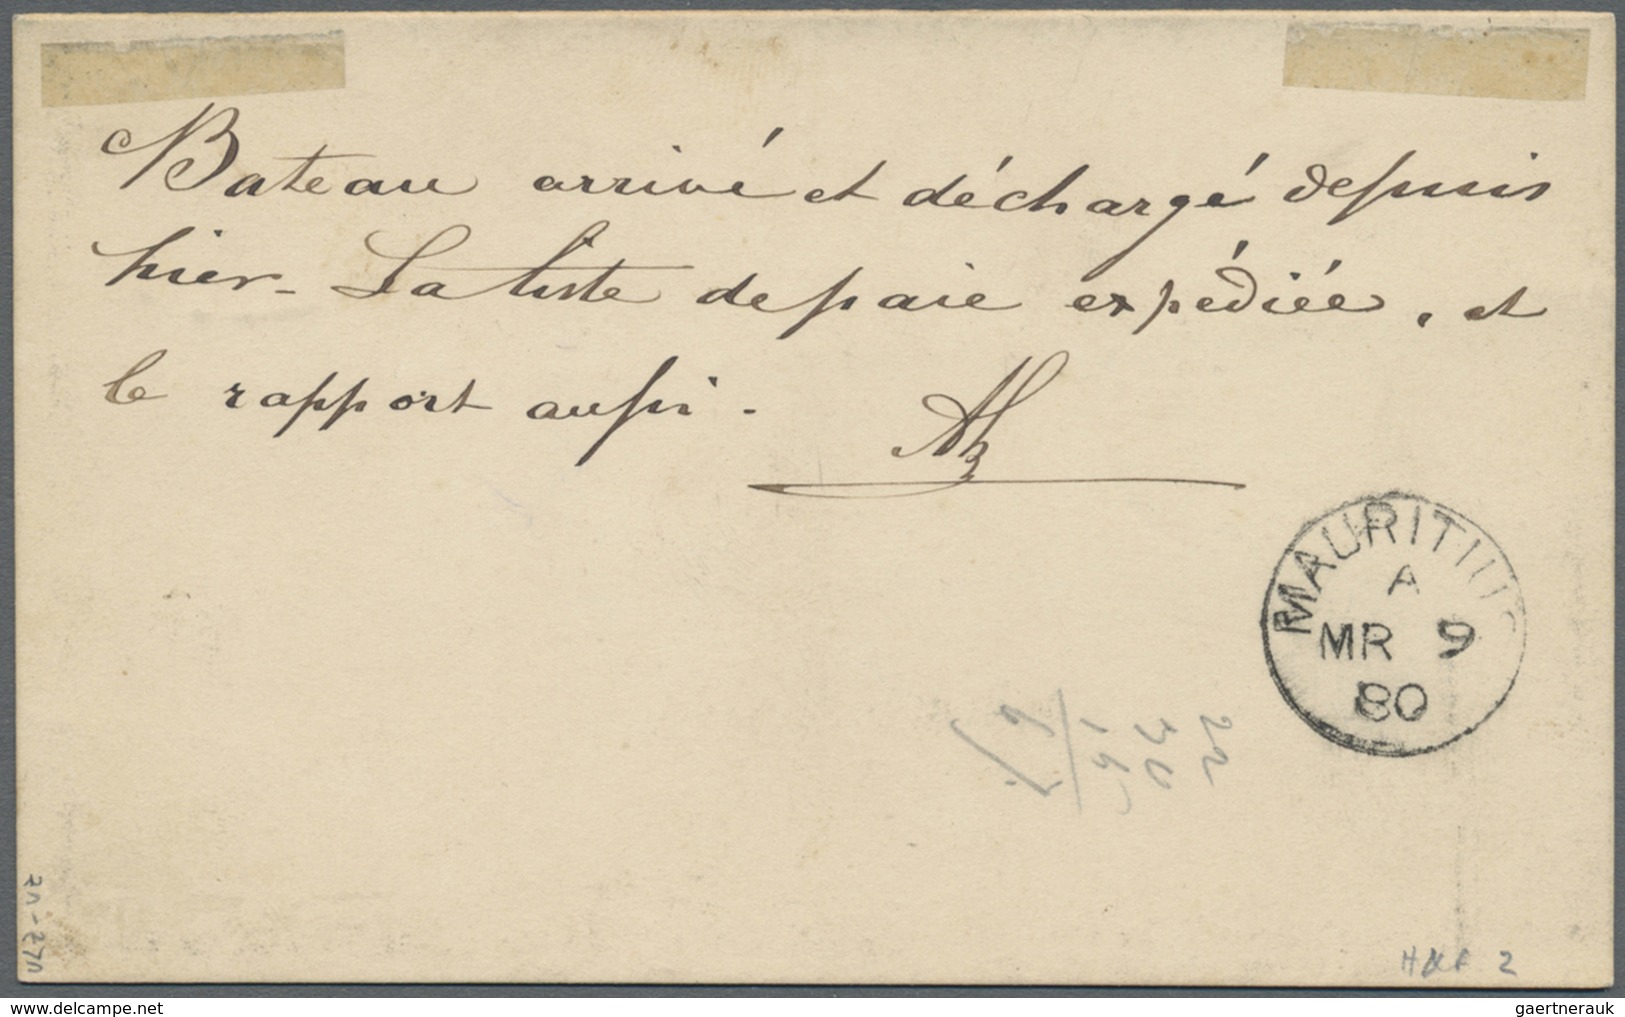 Br Mauritius: 1880: Postal Stationery Formular Card "MAURITIUS POST CARD" Franked With 2c Stamp (SG 83) - Mauritius (...-1967)